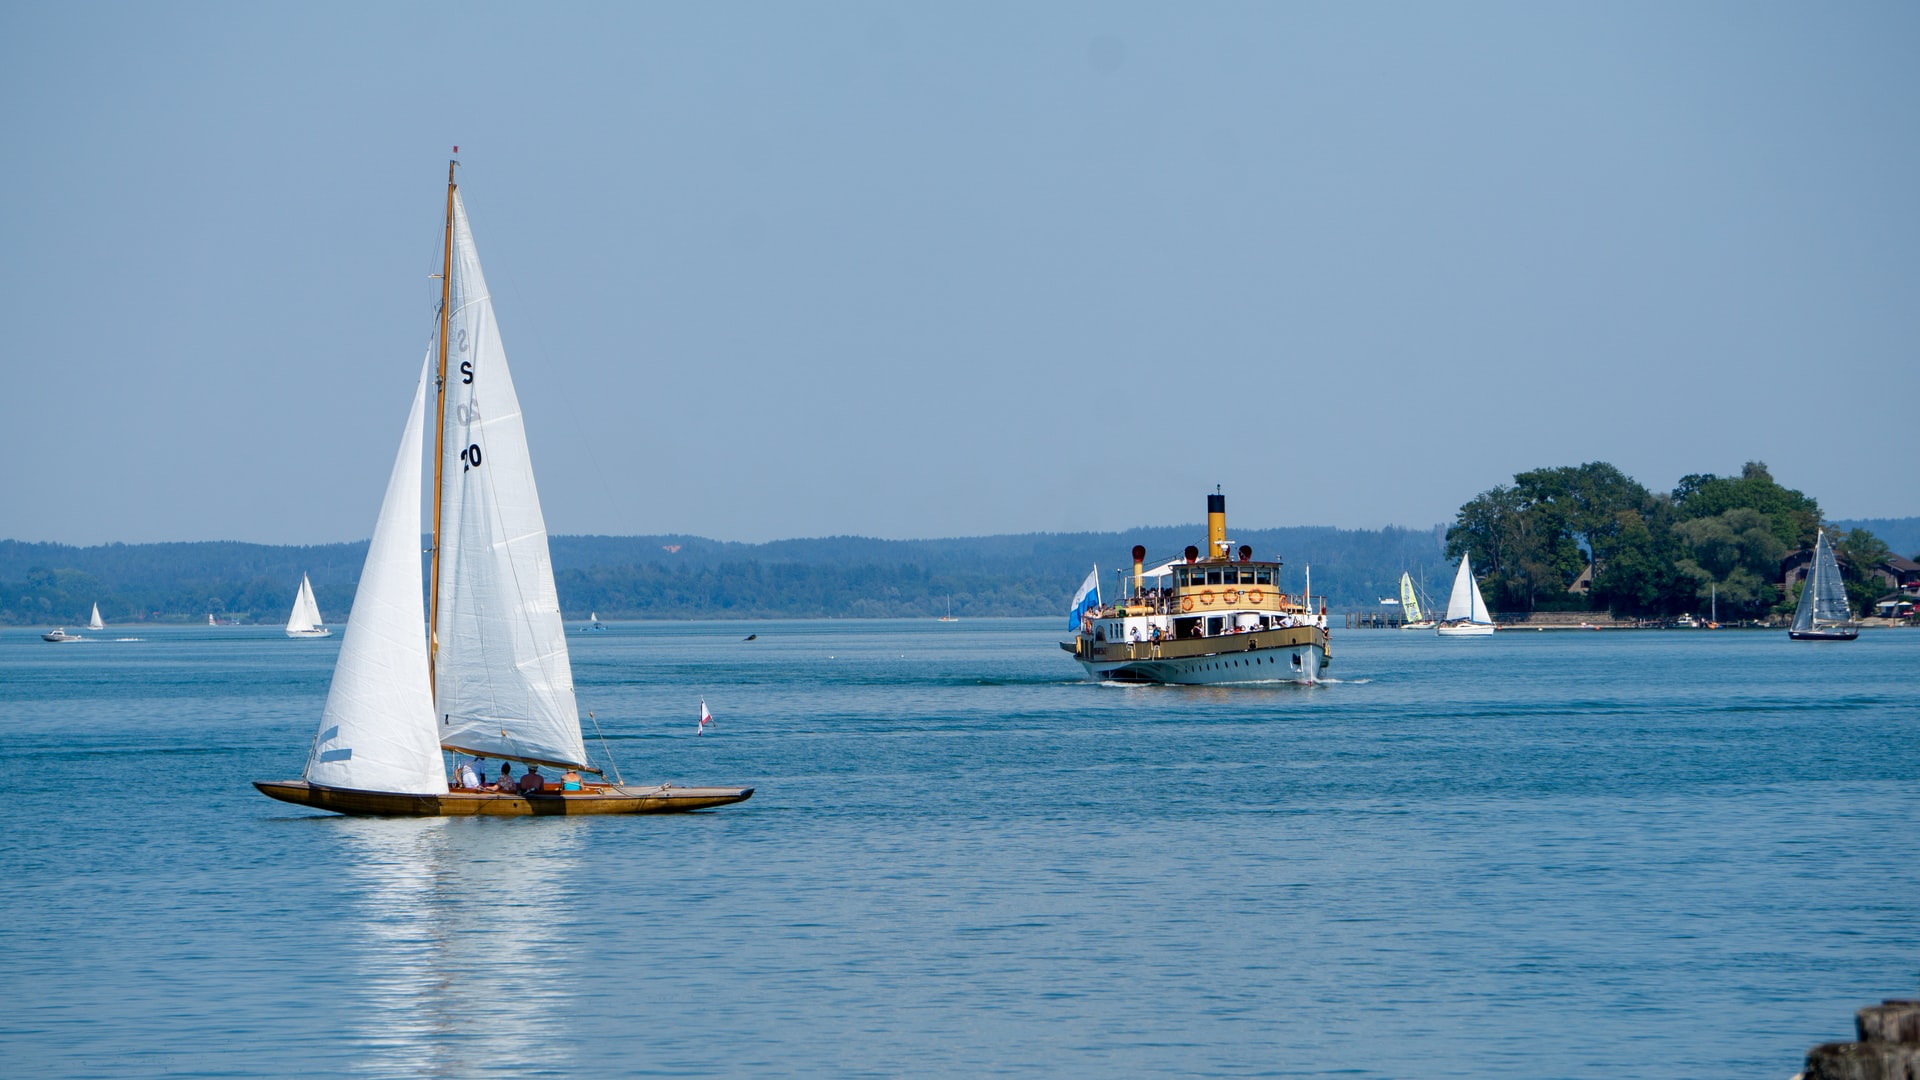 Lake with island and sailing boats.